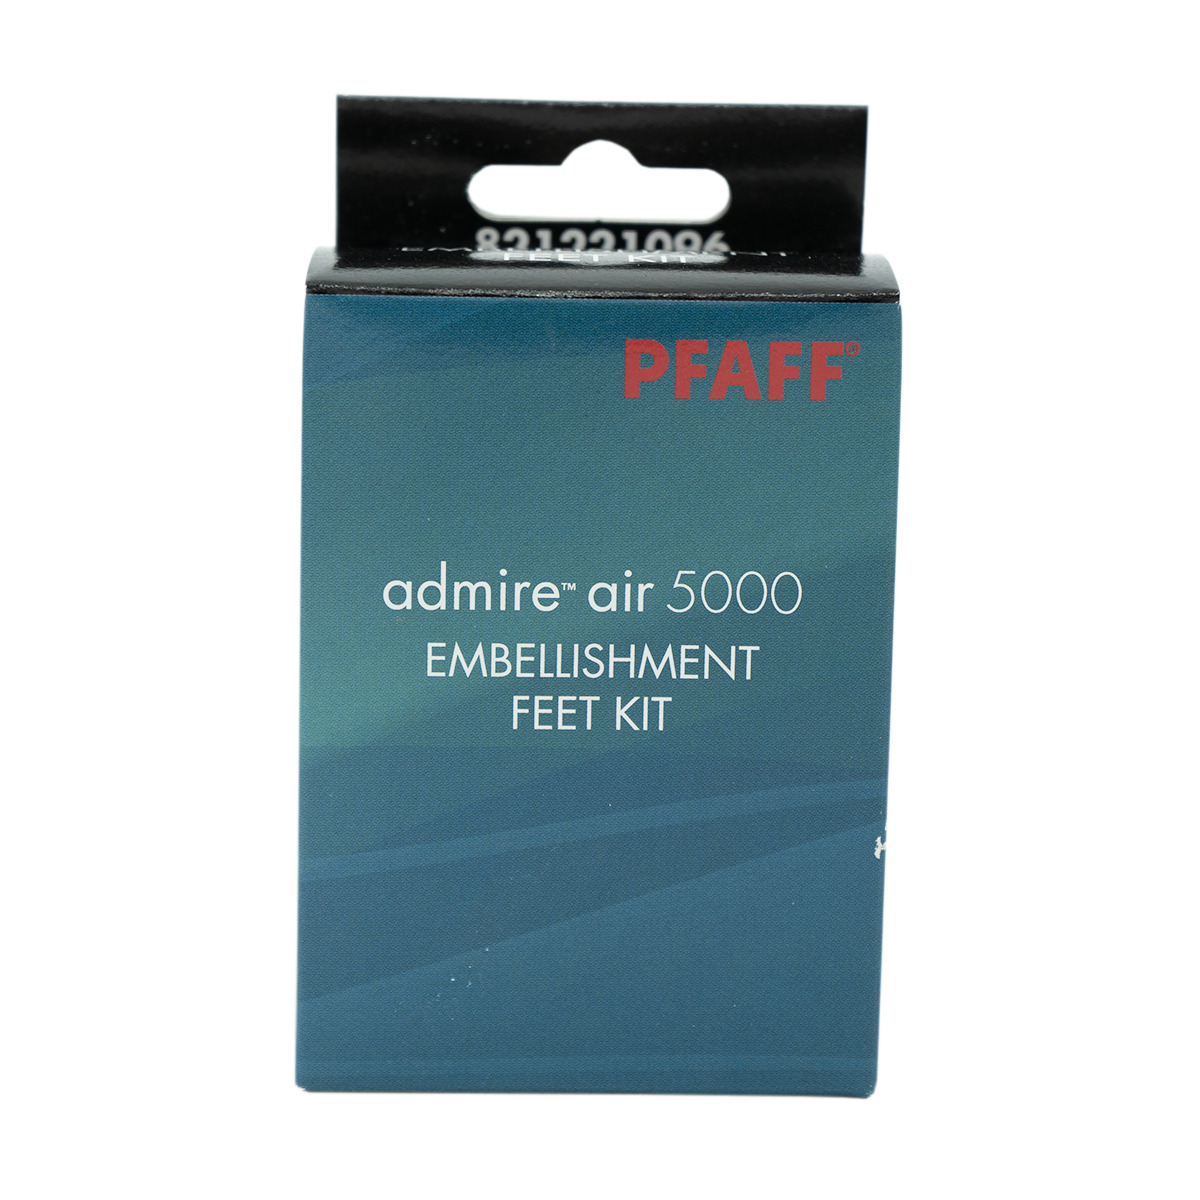 admire™ air 5000 embellishment feet kit